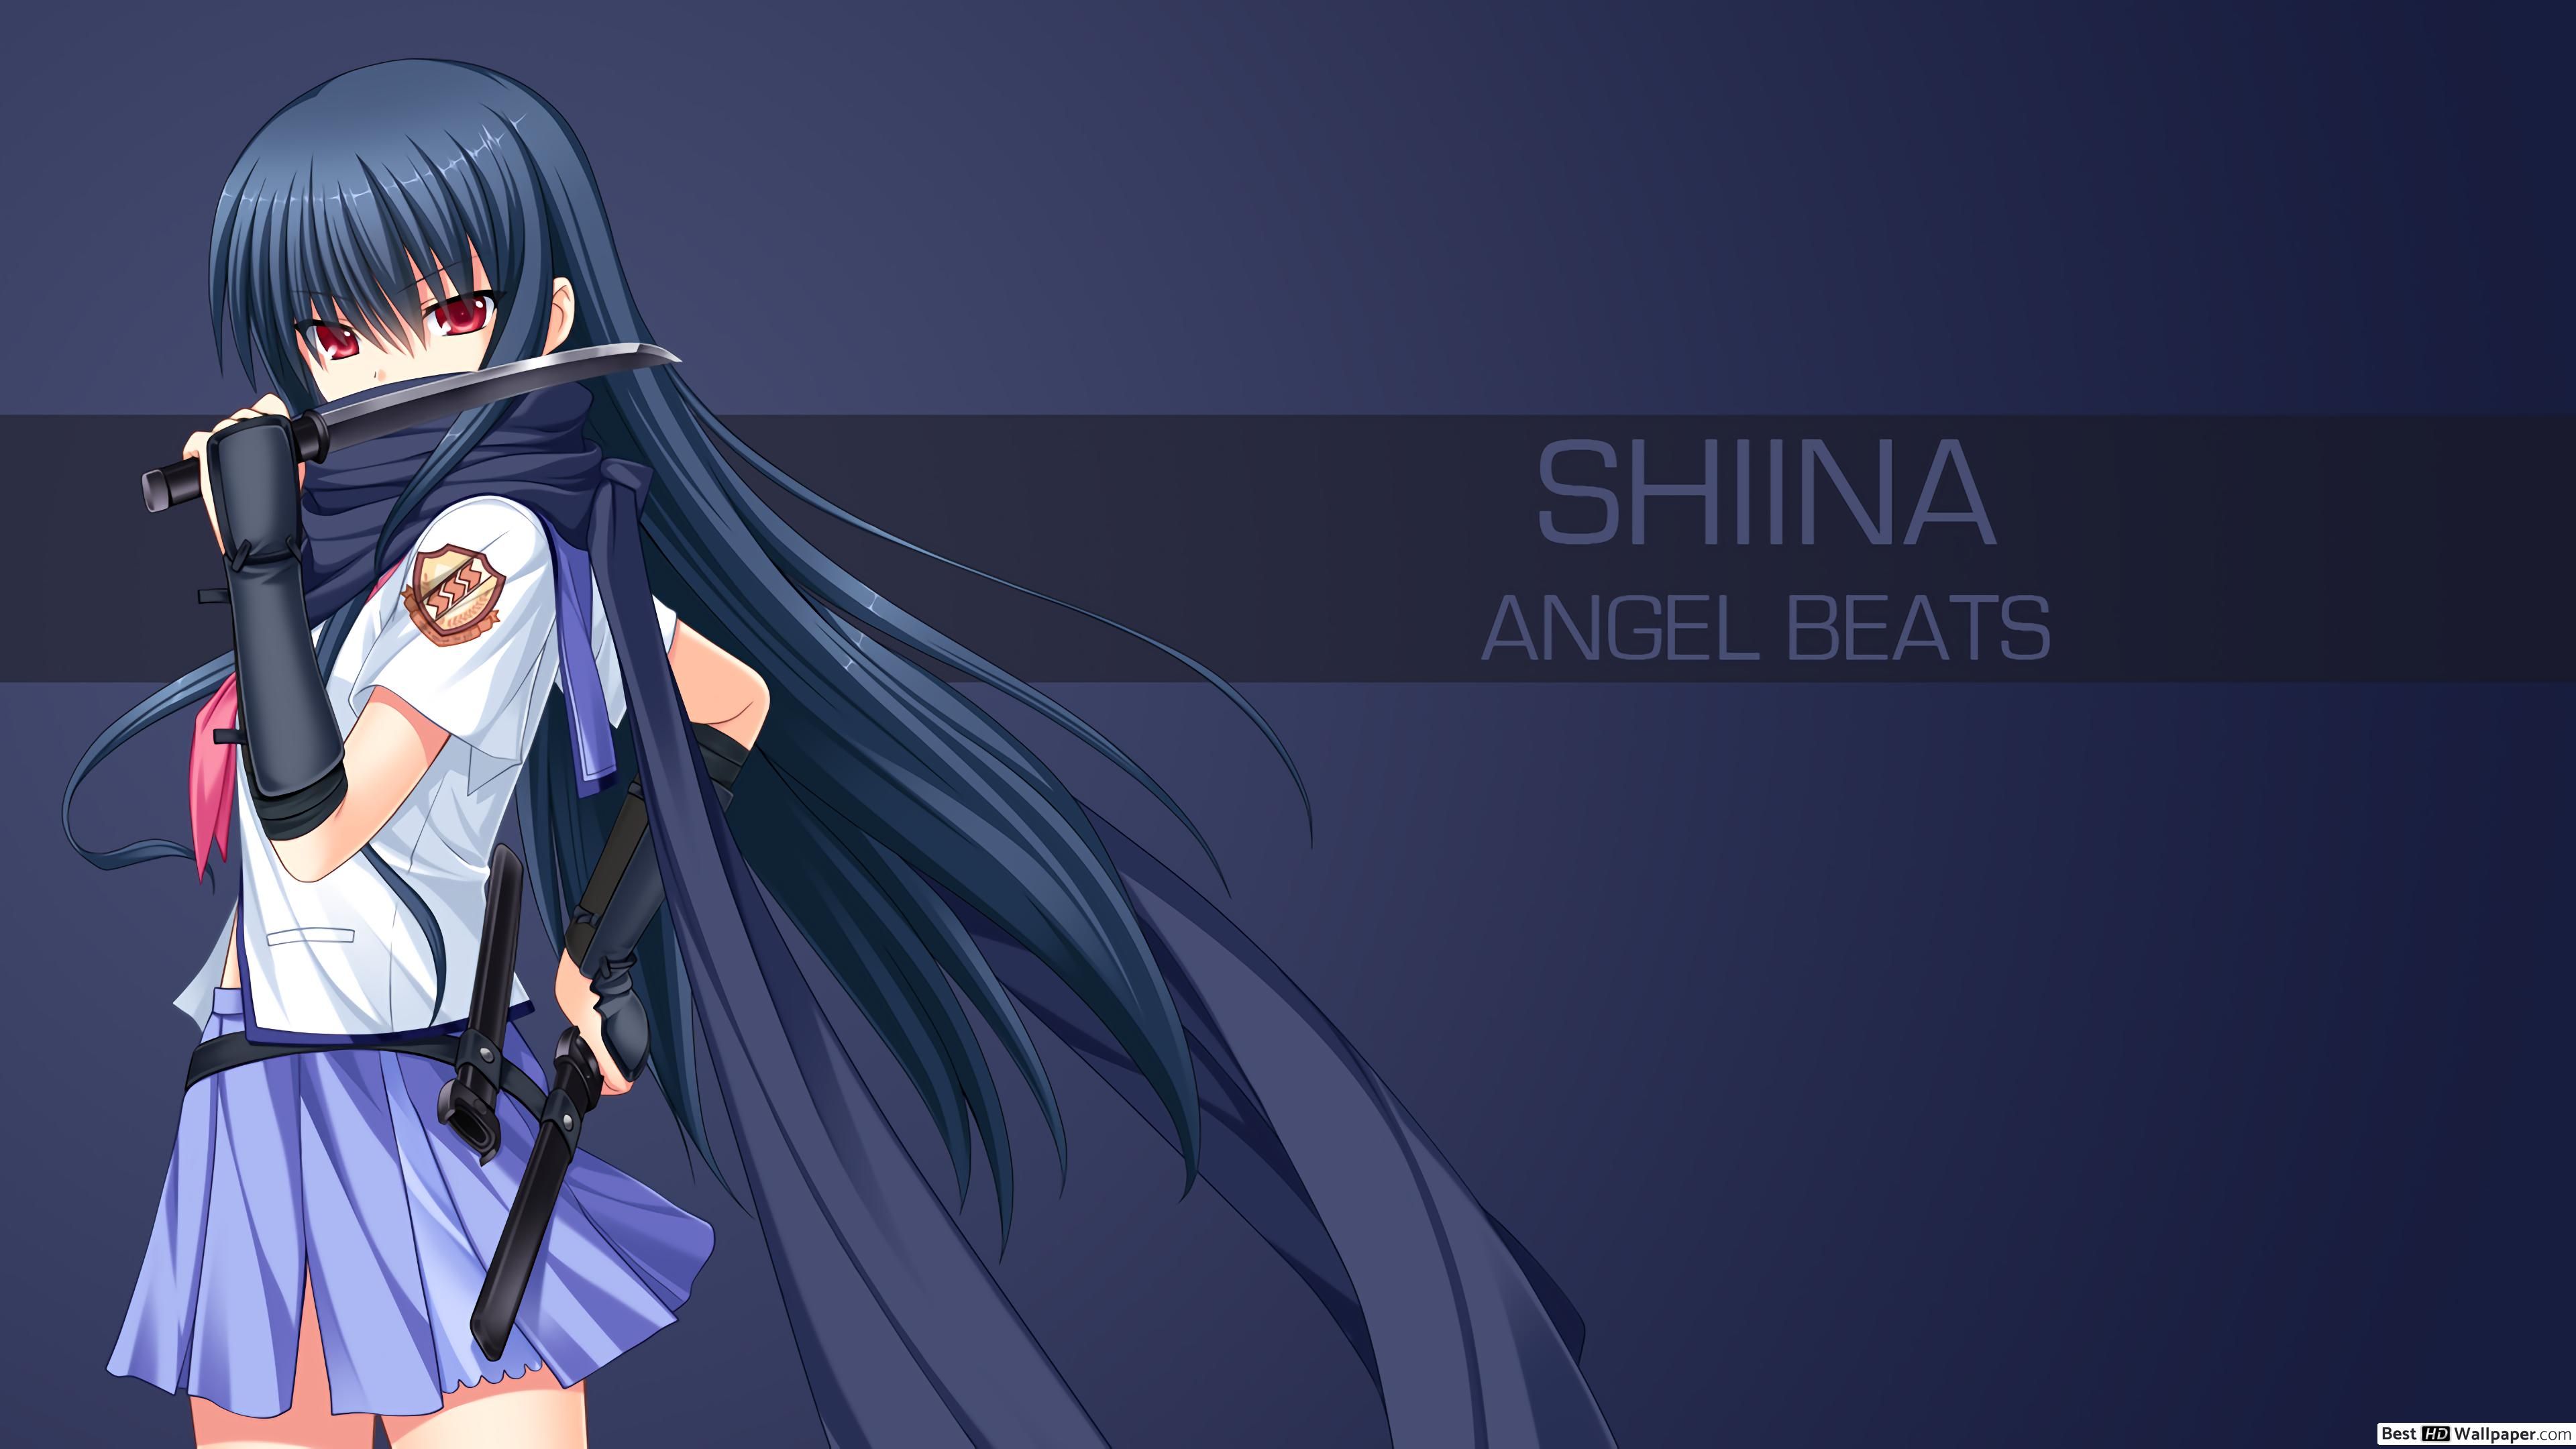 Angel beats, shiina HD wallpaper download